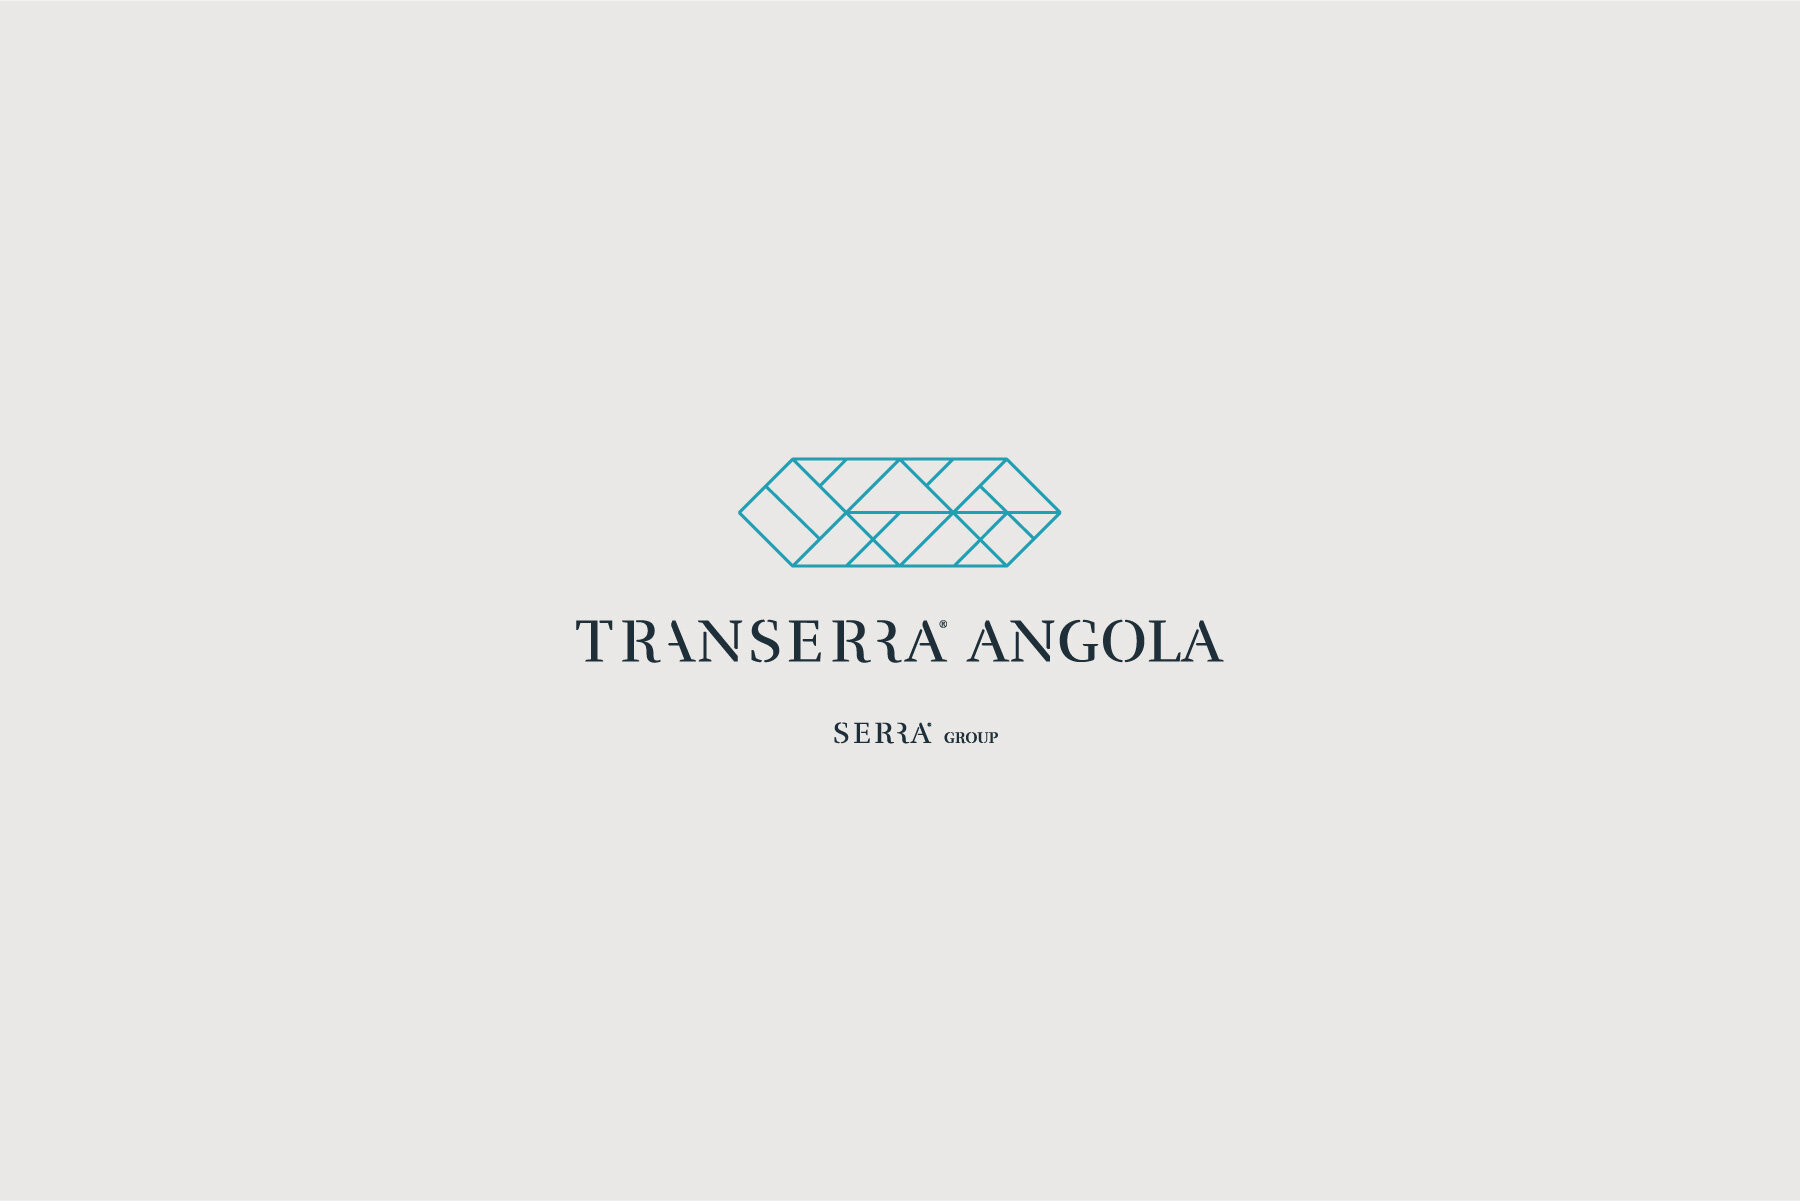 brand-identity-angola-serra-group-9.jpg